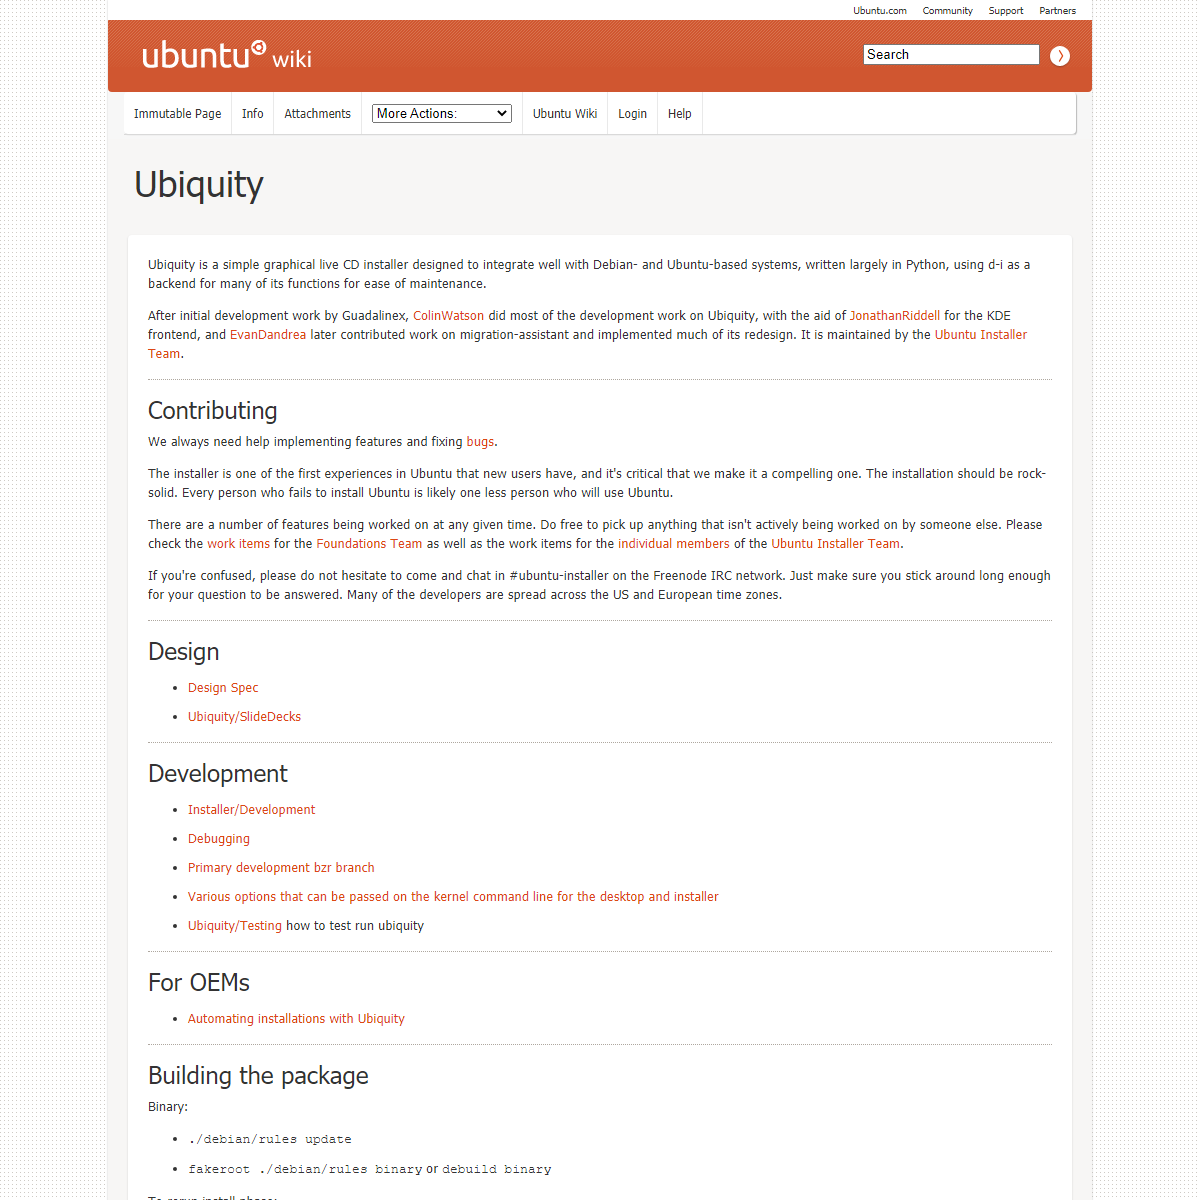 A complete backup of https://wiki.ubuntu.com/Ubiquity